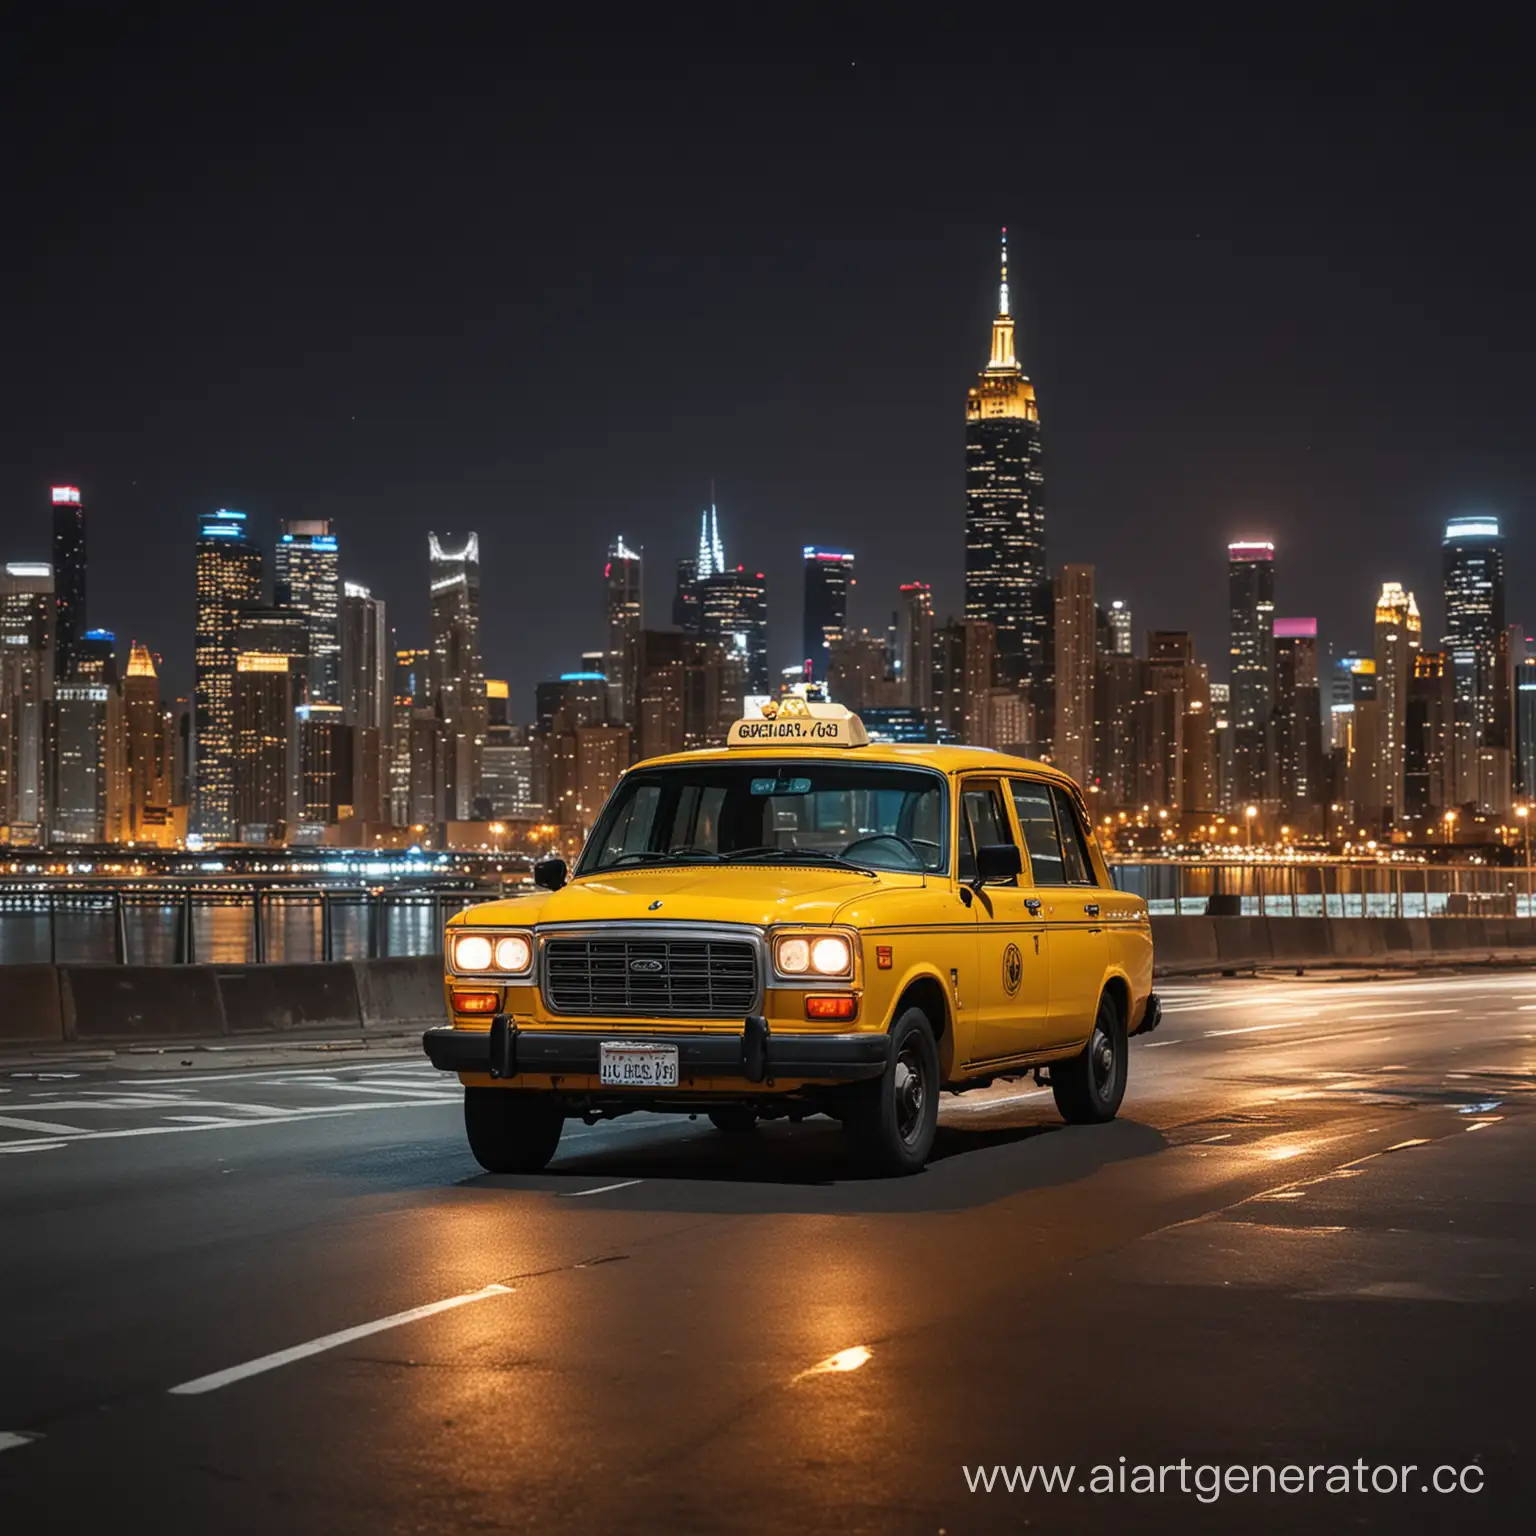 City-Nightlife-Yellow-Cab-Amidst-Urban-Lights